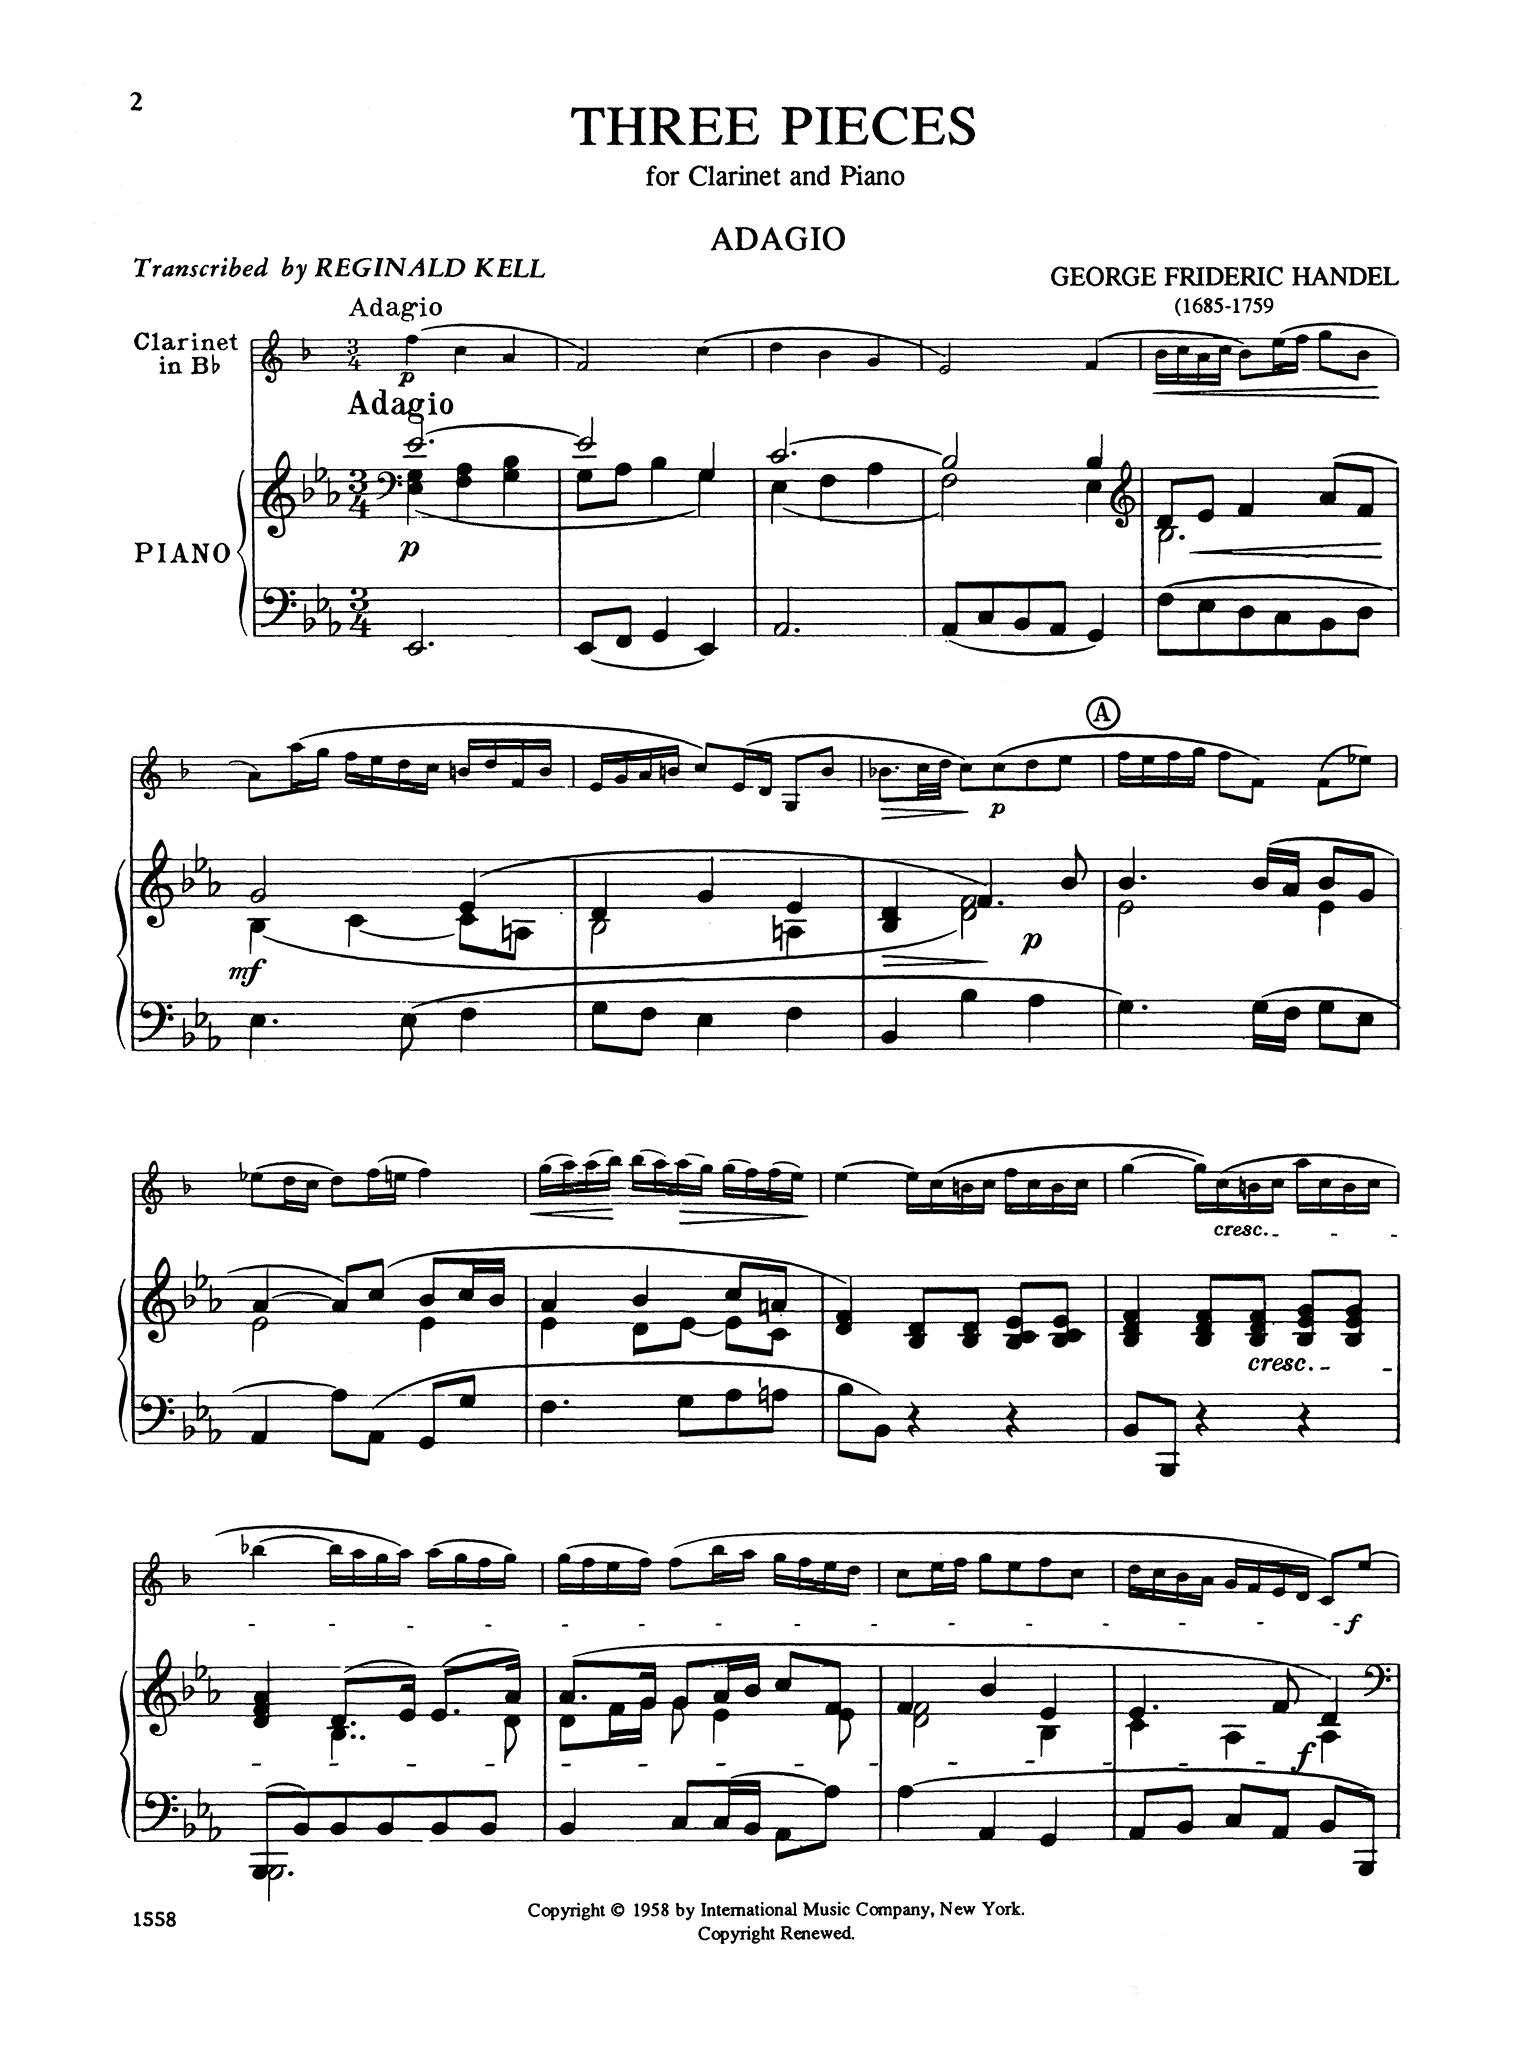 Handel Kell Three Pieces for Clarinet & Piano - movement 1